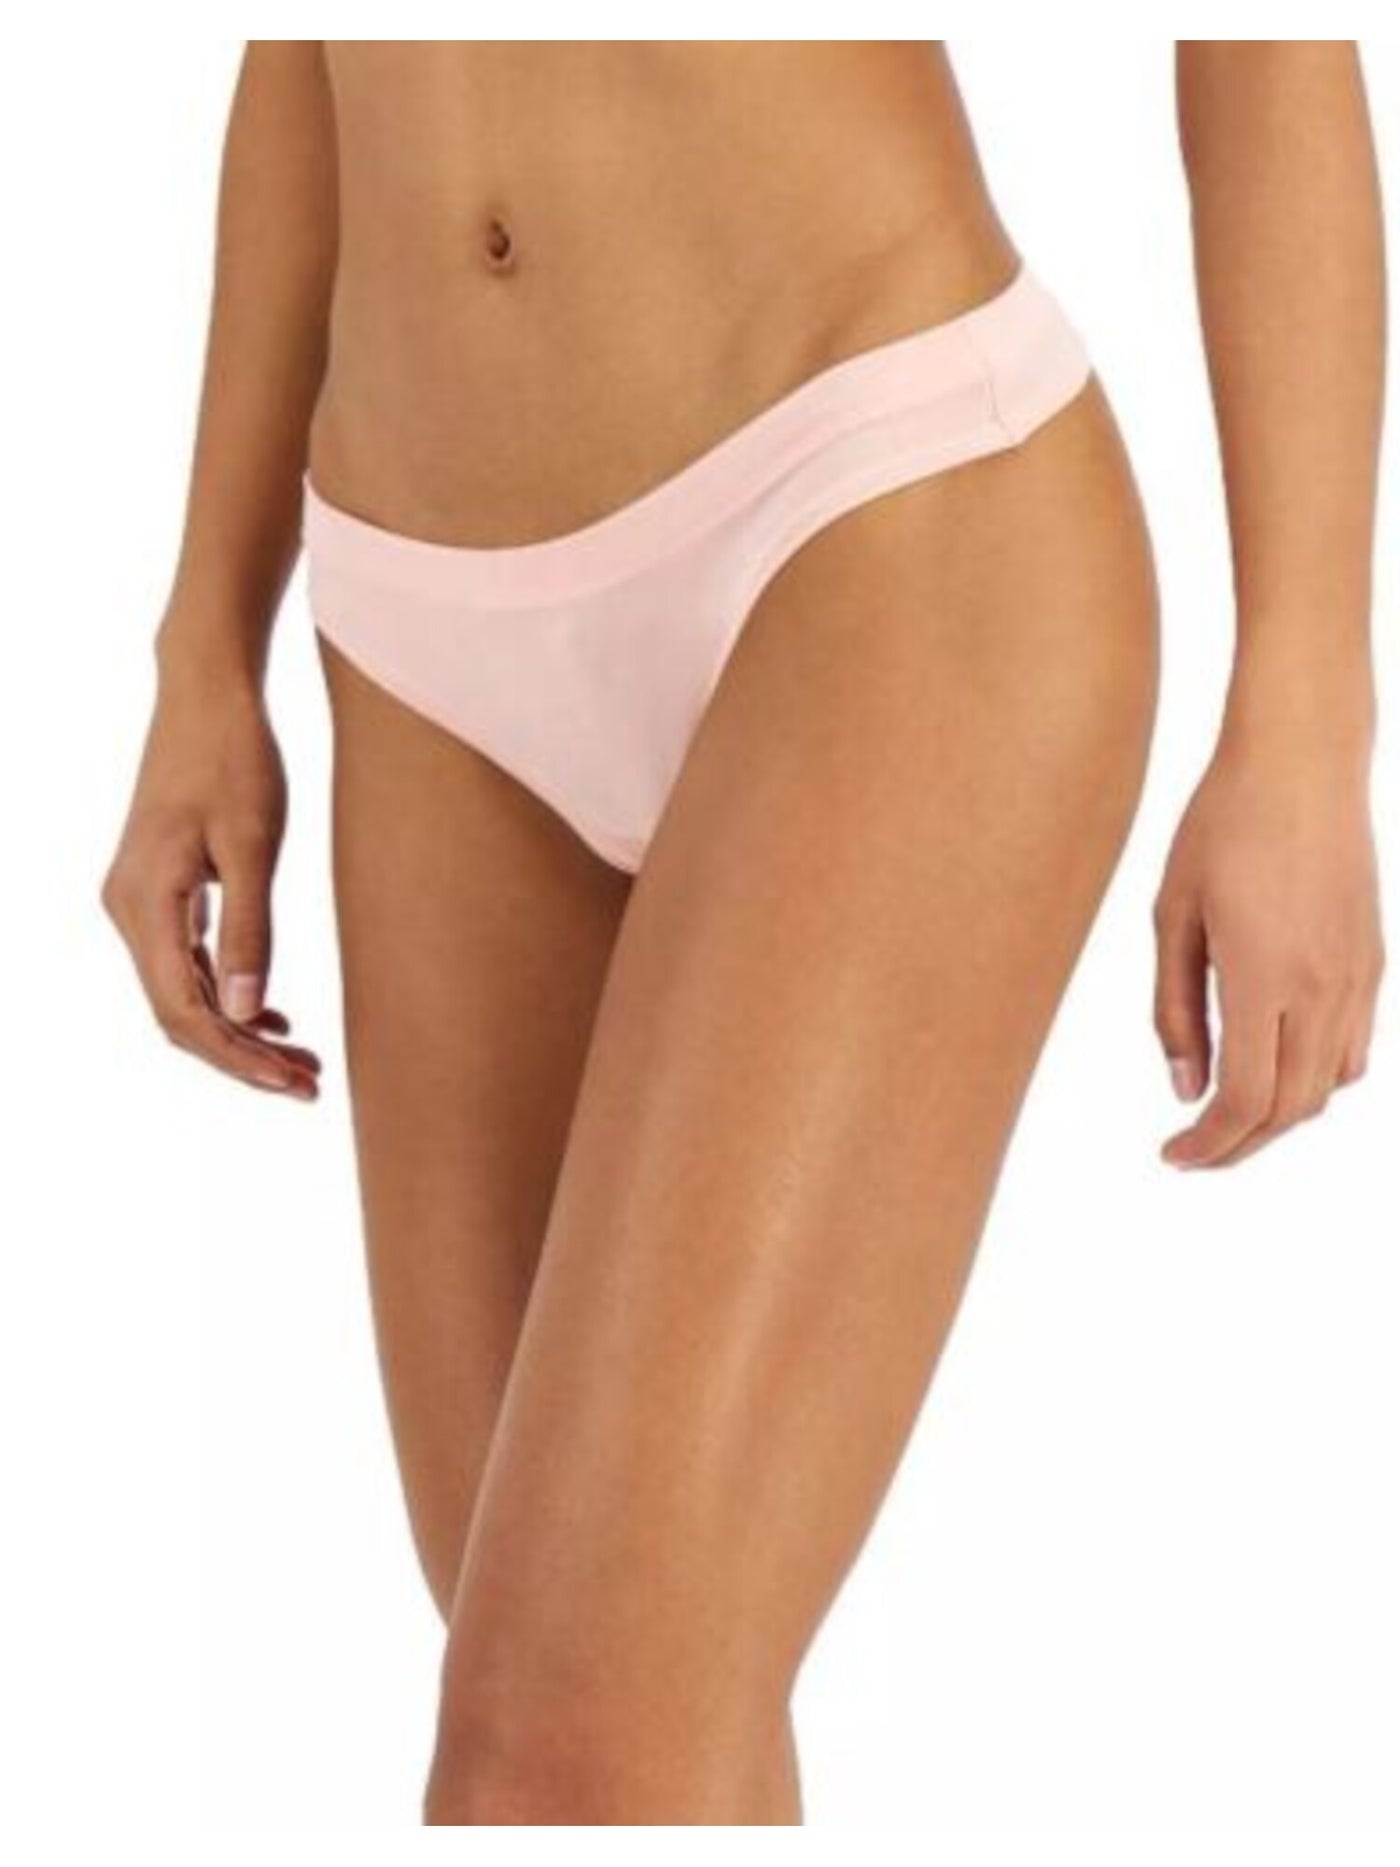 JENNI Intimates Pink Thong Underwear XXXL